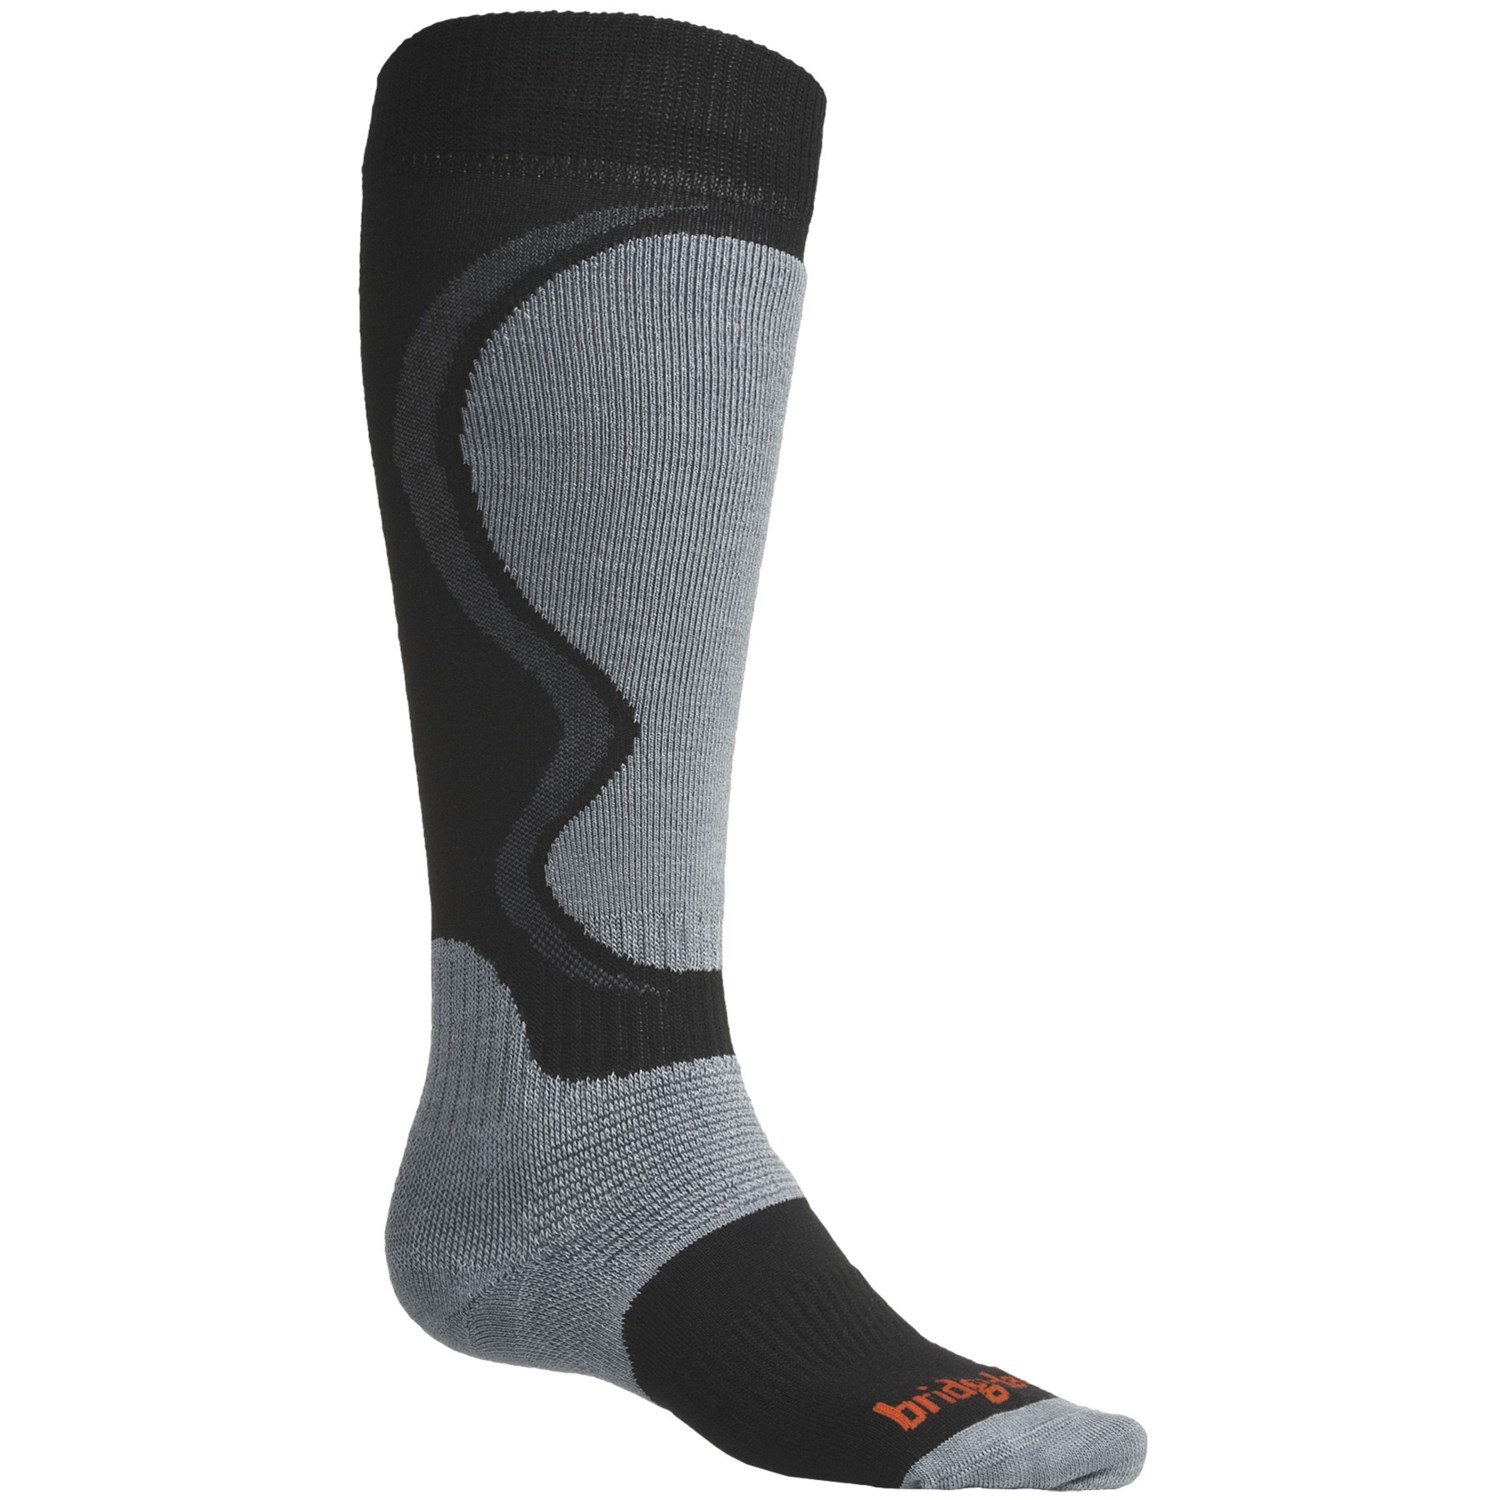 Bridgedale Merino Wool Ski Socks (For Men) - Save 61%